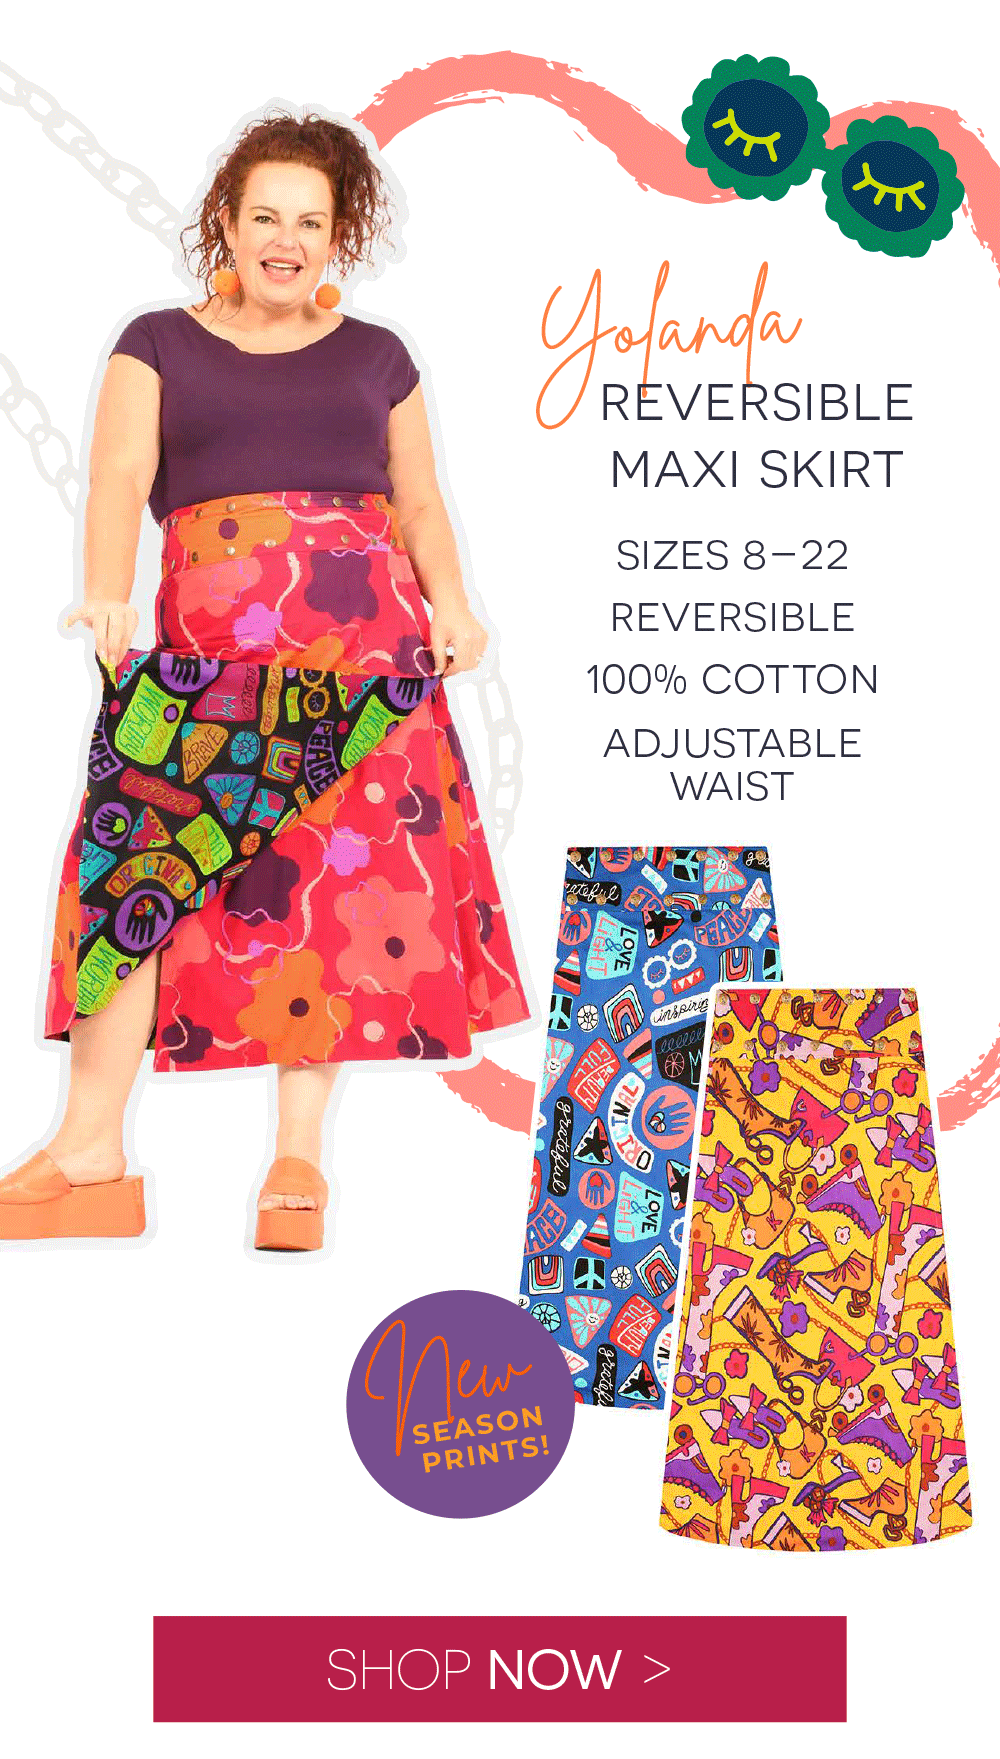 Yolanda reversible maxi skirt, sizes 8–22, reversible, 100% cotton, adjustable waist, new season prints